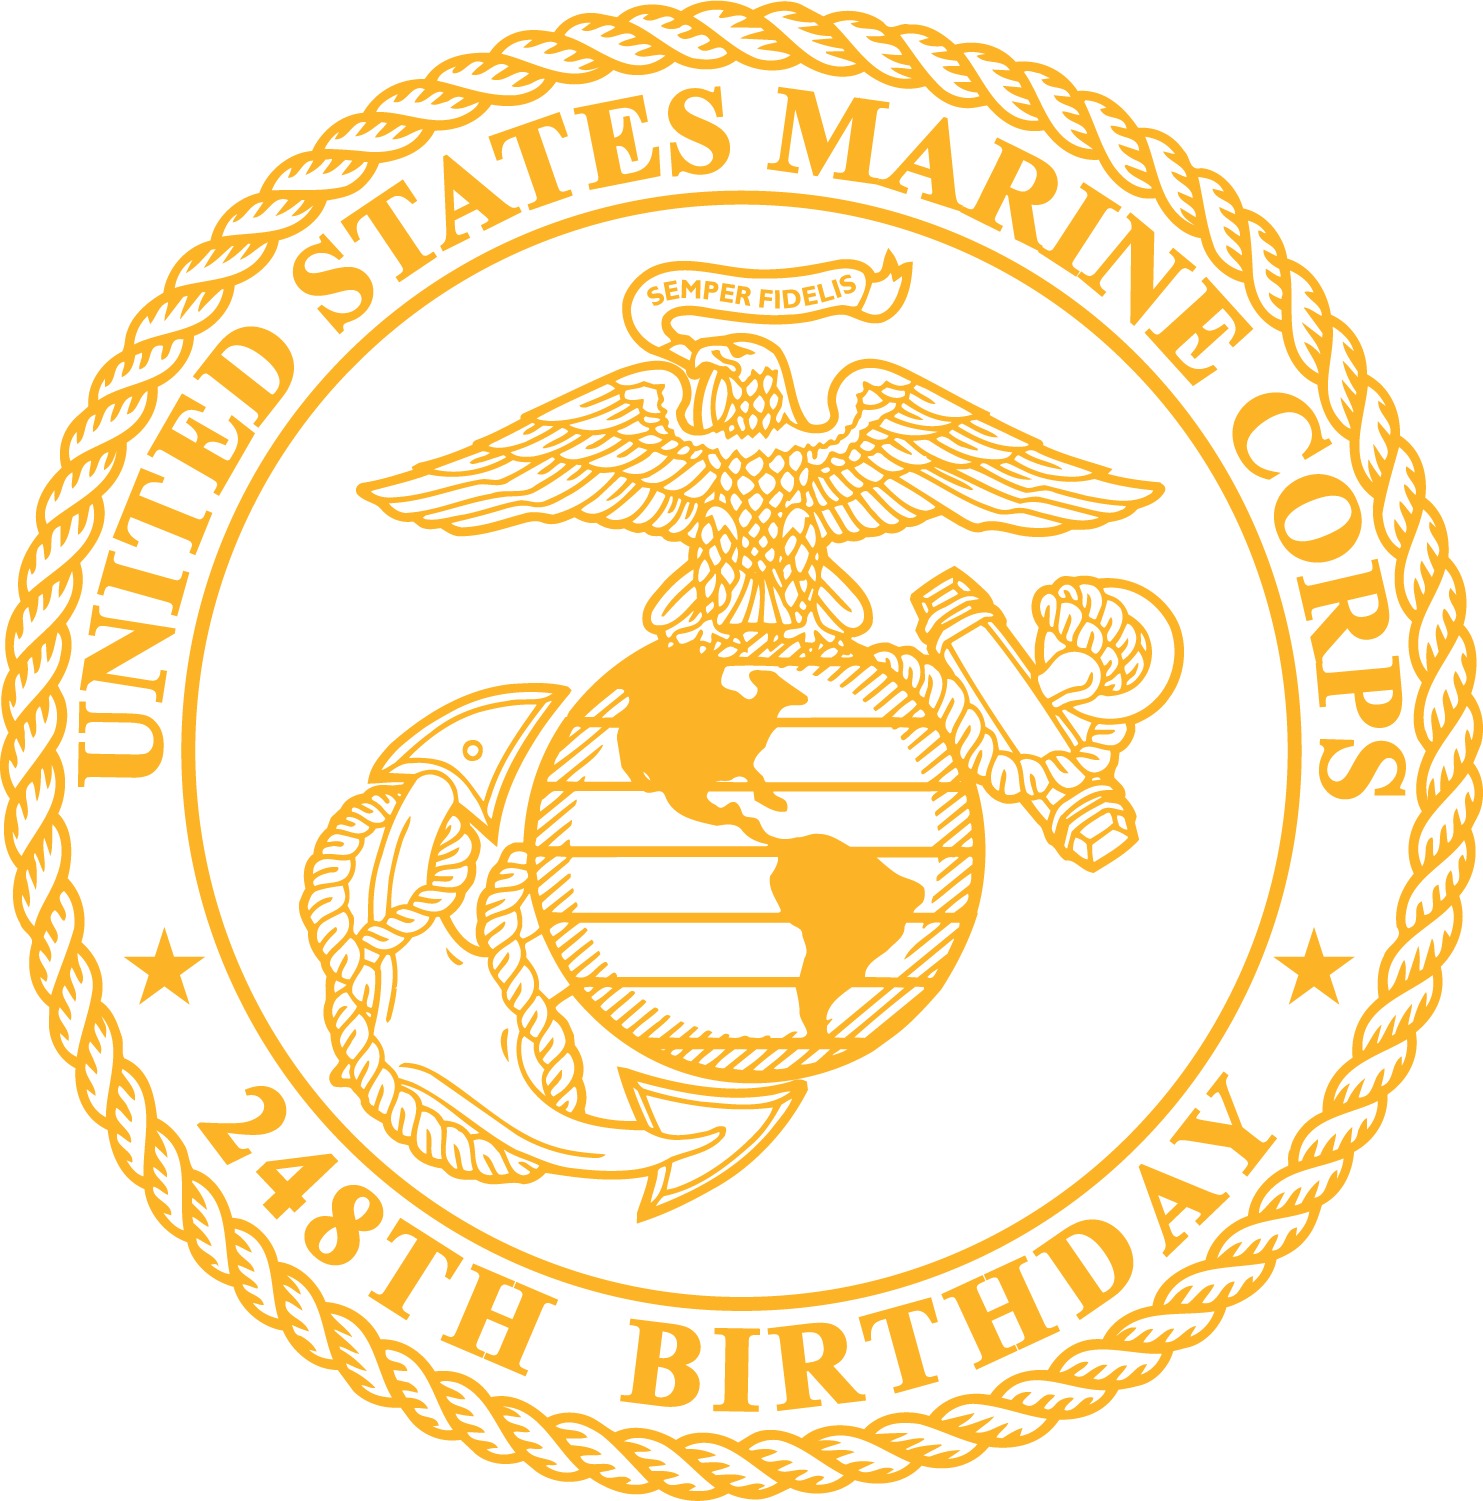 USMC Birthday Ball and traditional stock embellishment options